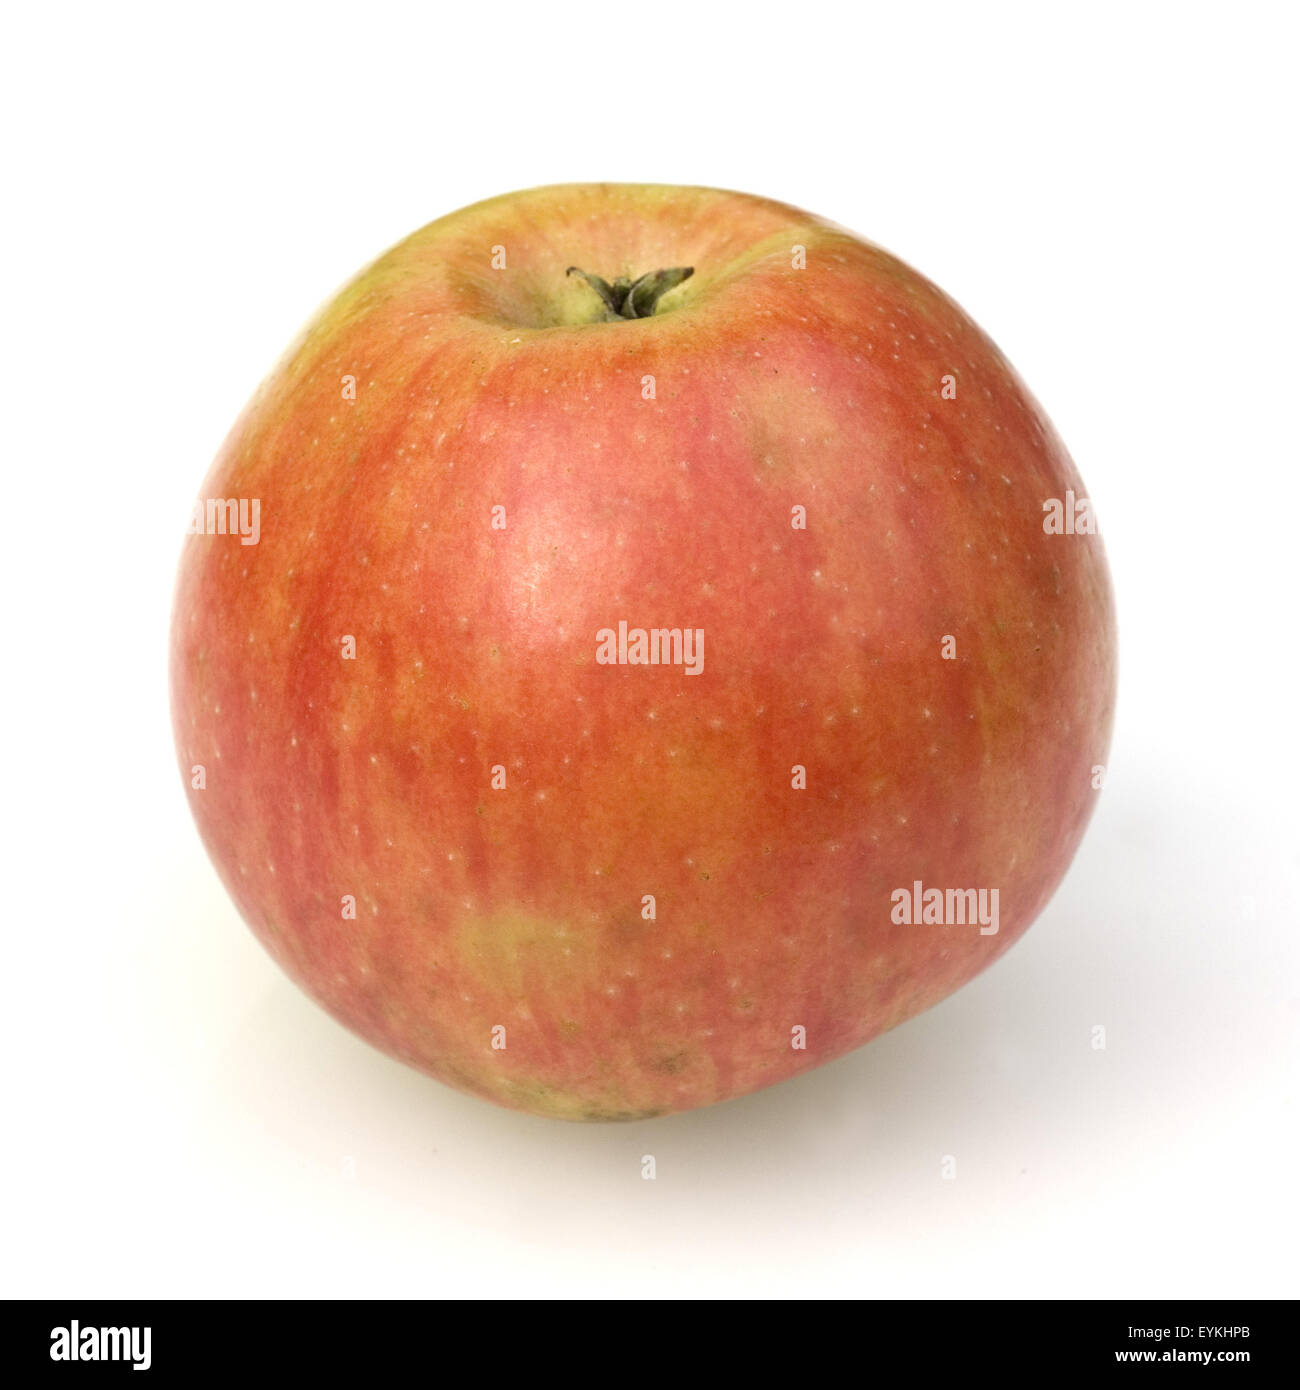 Schoener von Nordhausen, Apfelsorte, Apfel, Kernobst, Obst, Stock Photo